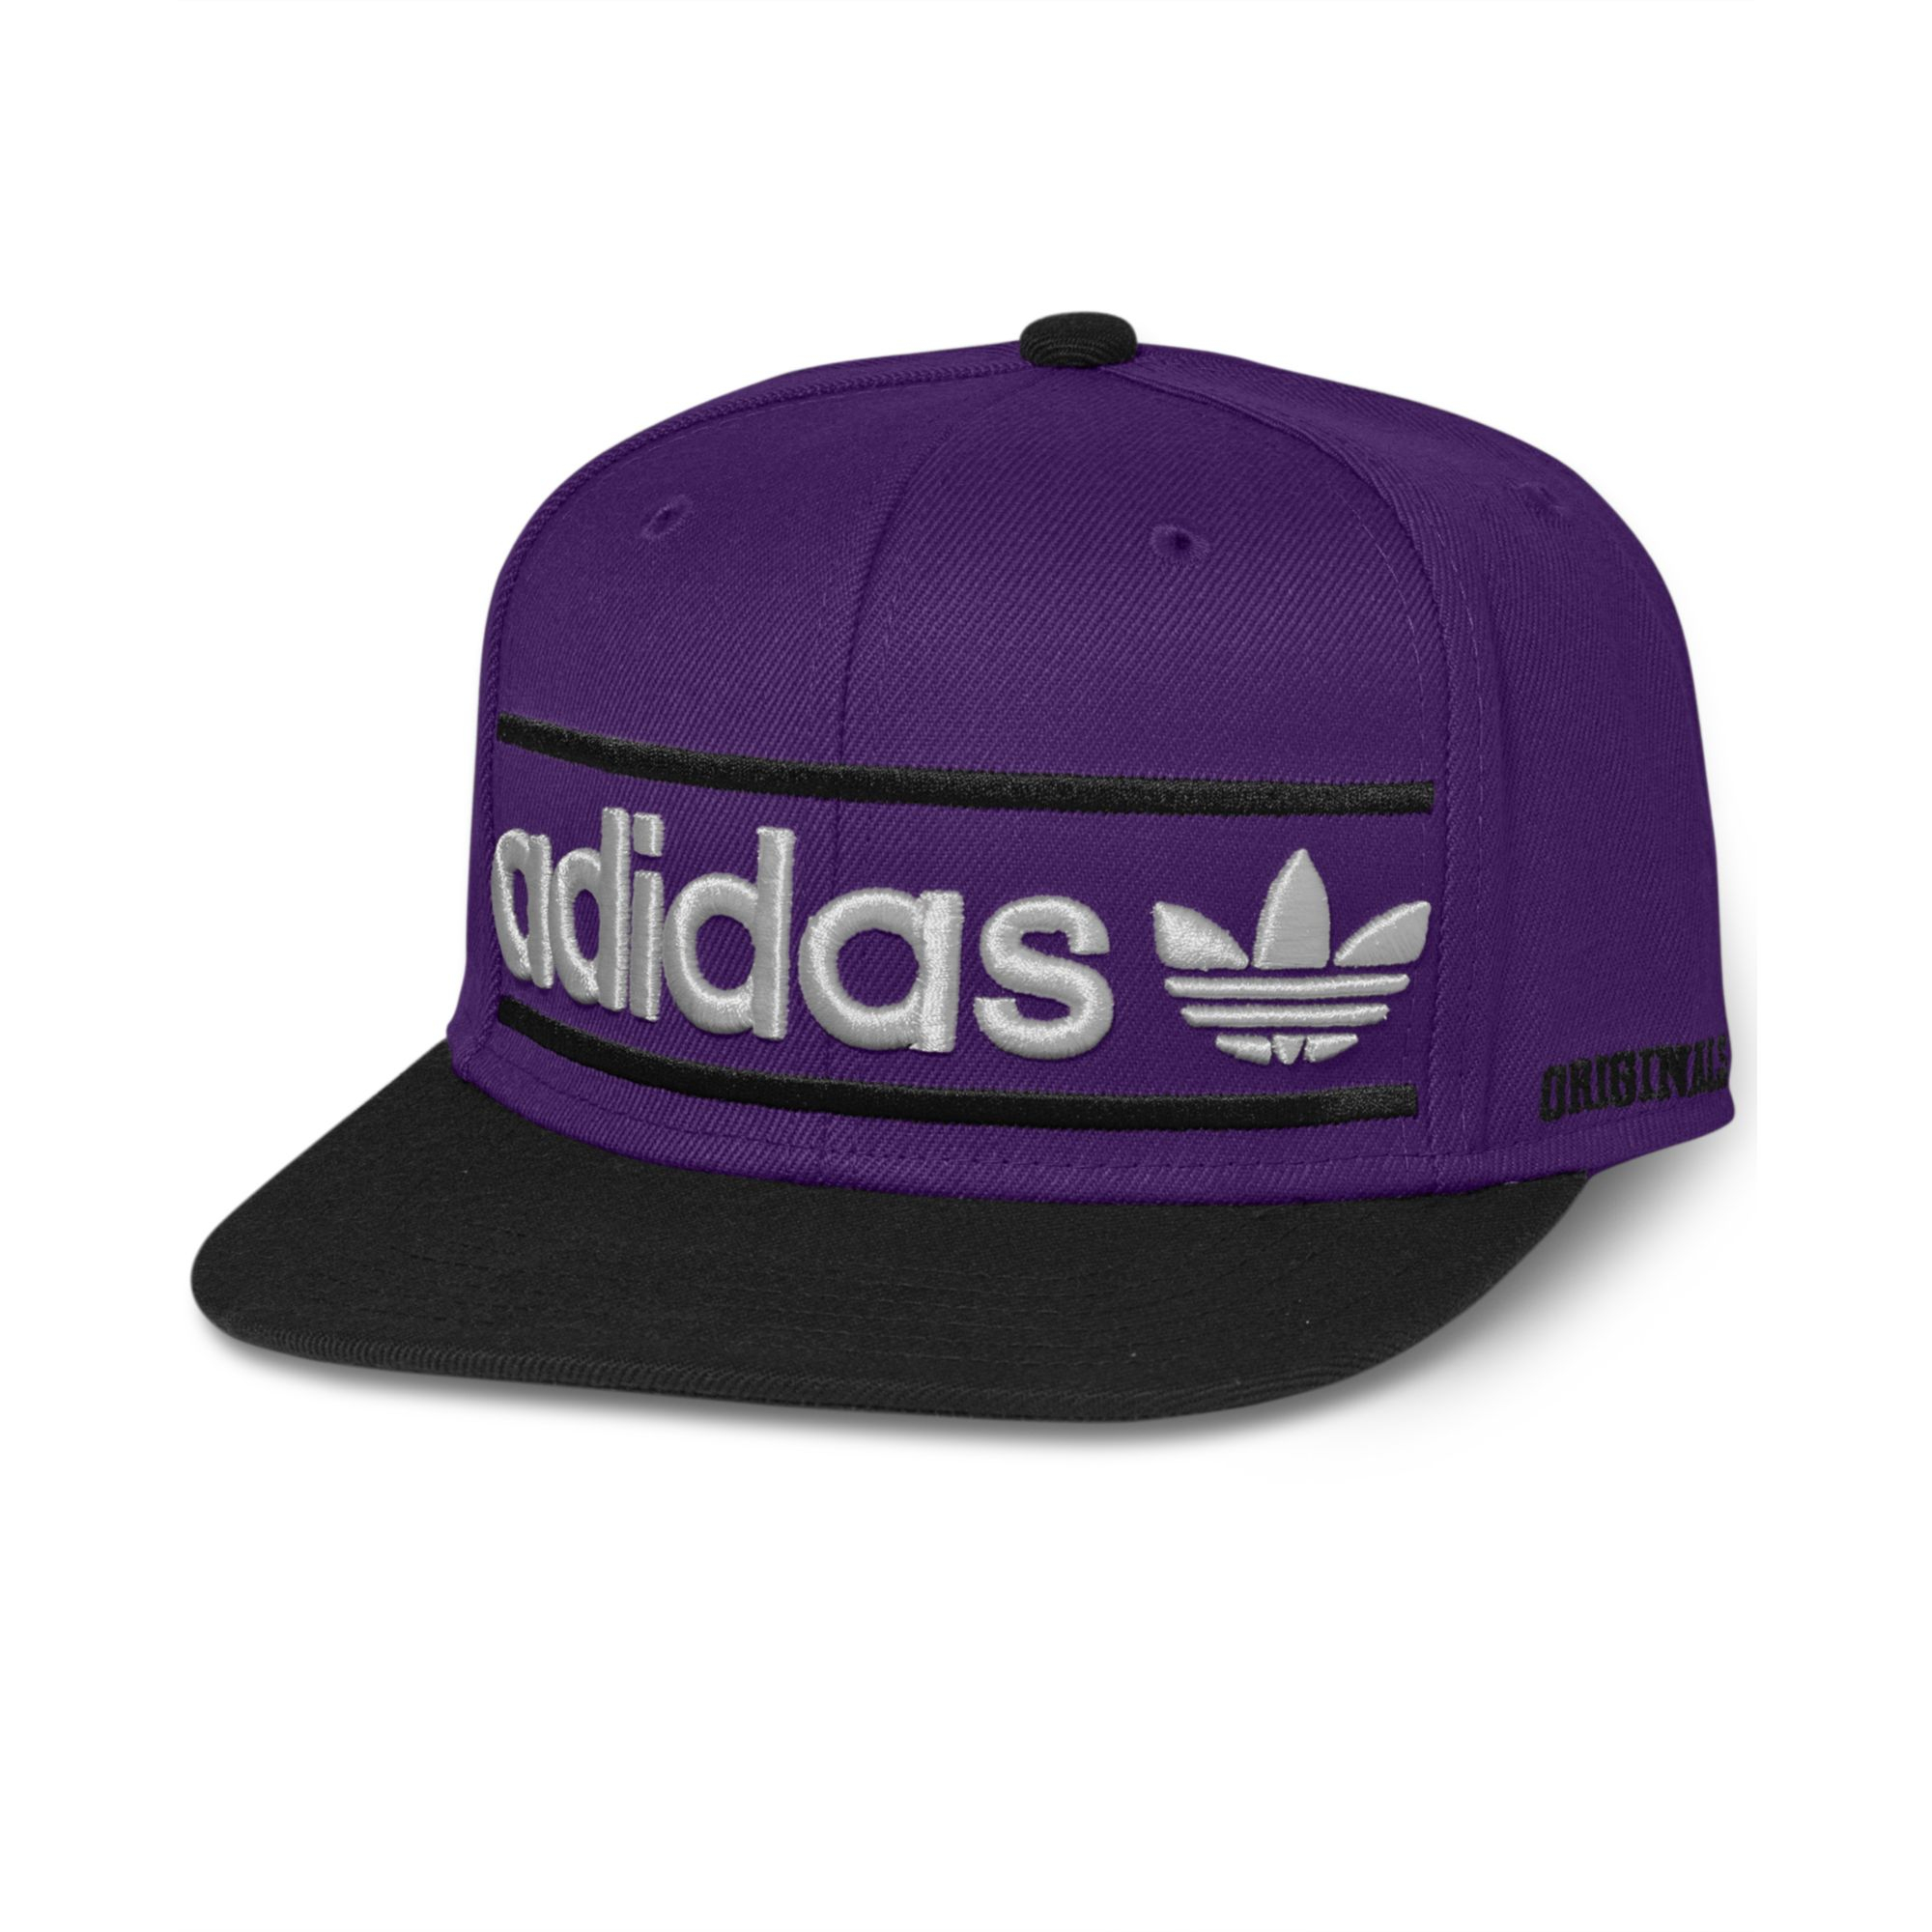 adidas purple hat adi originals heritage snapback cap product 1 14697474 0 474899775 normal